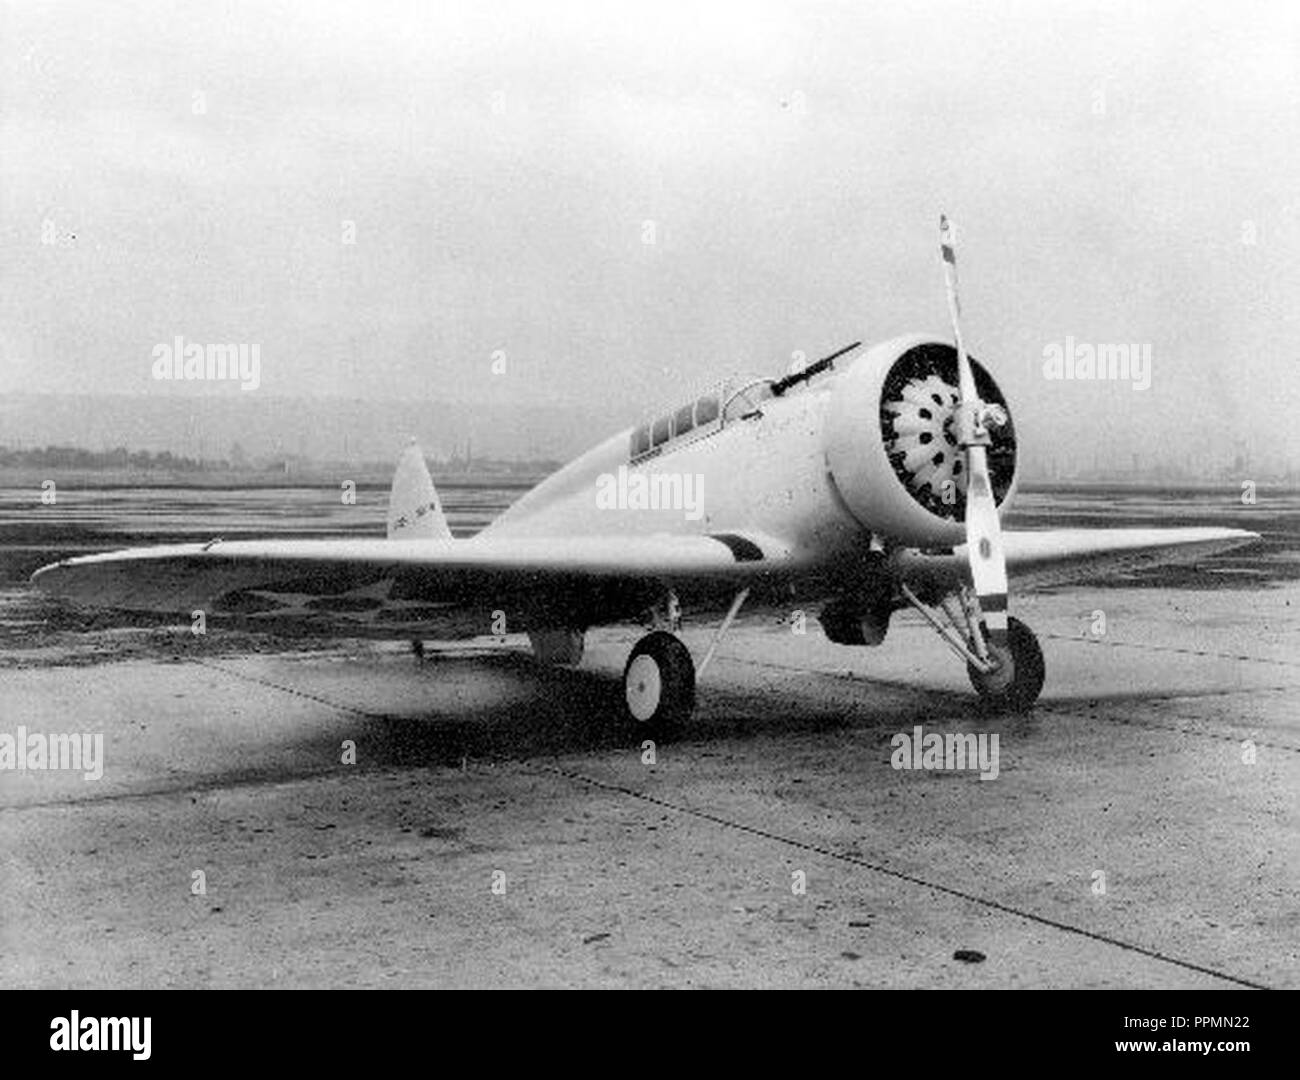 Boeing XF7B-1 early. Stock Photo